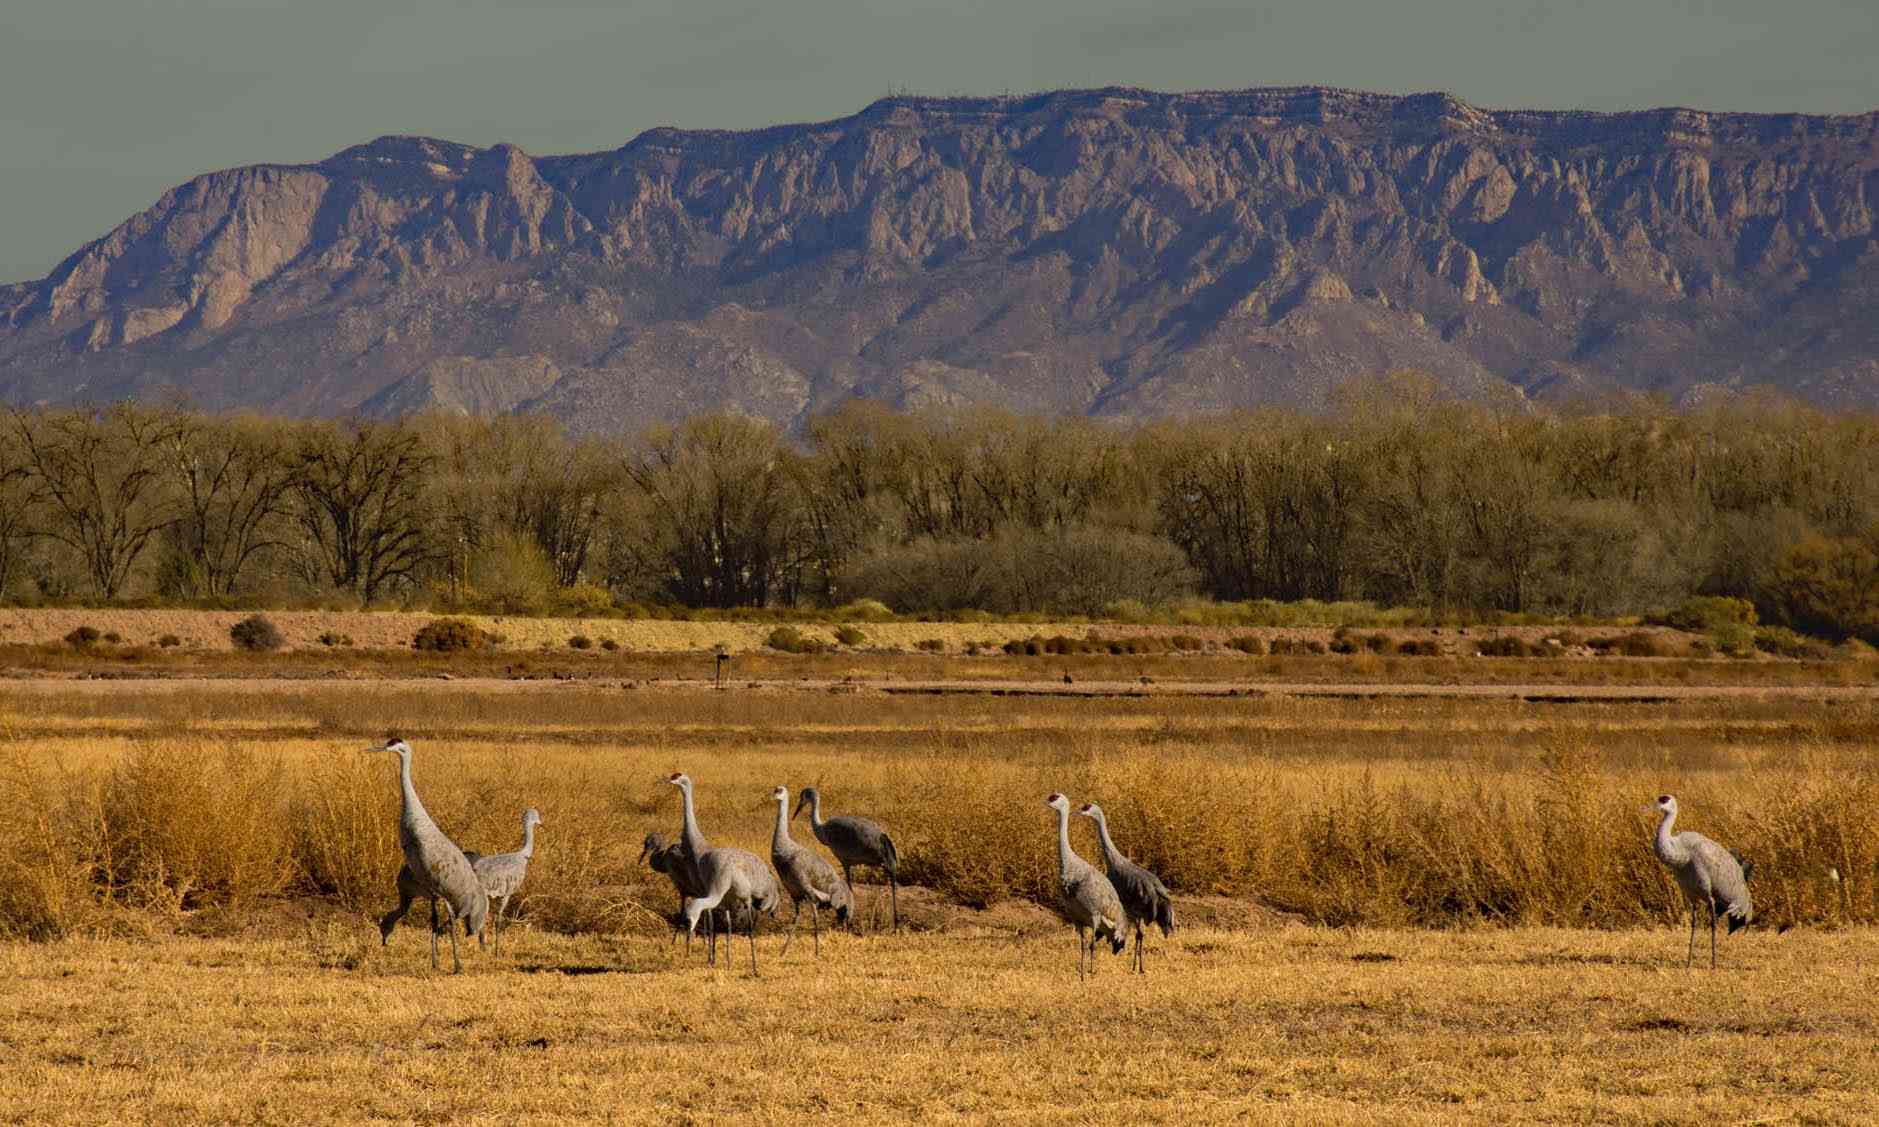 Sandhill cranes in field in Valle de Oro NWR 